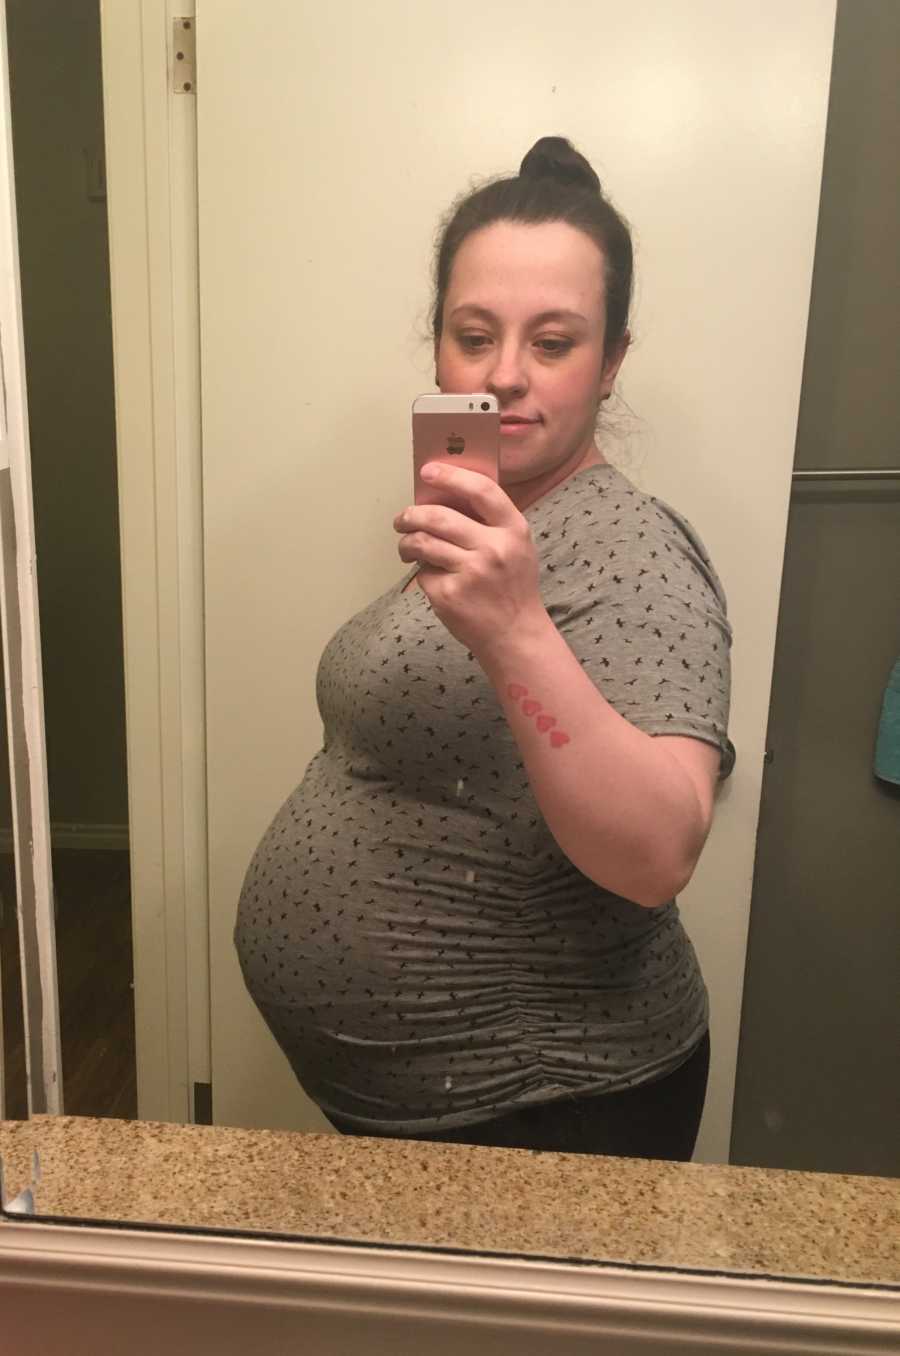 Pregnant woman takes mirror selfie in bathroom